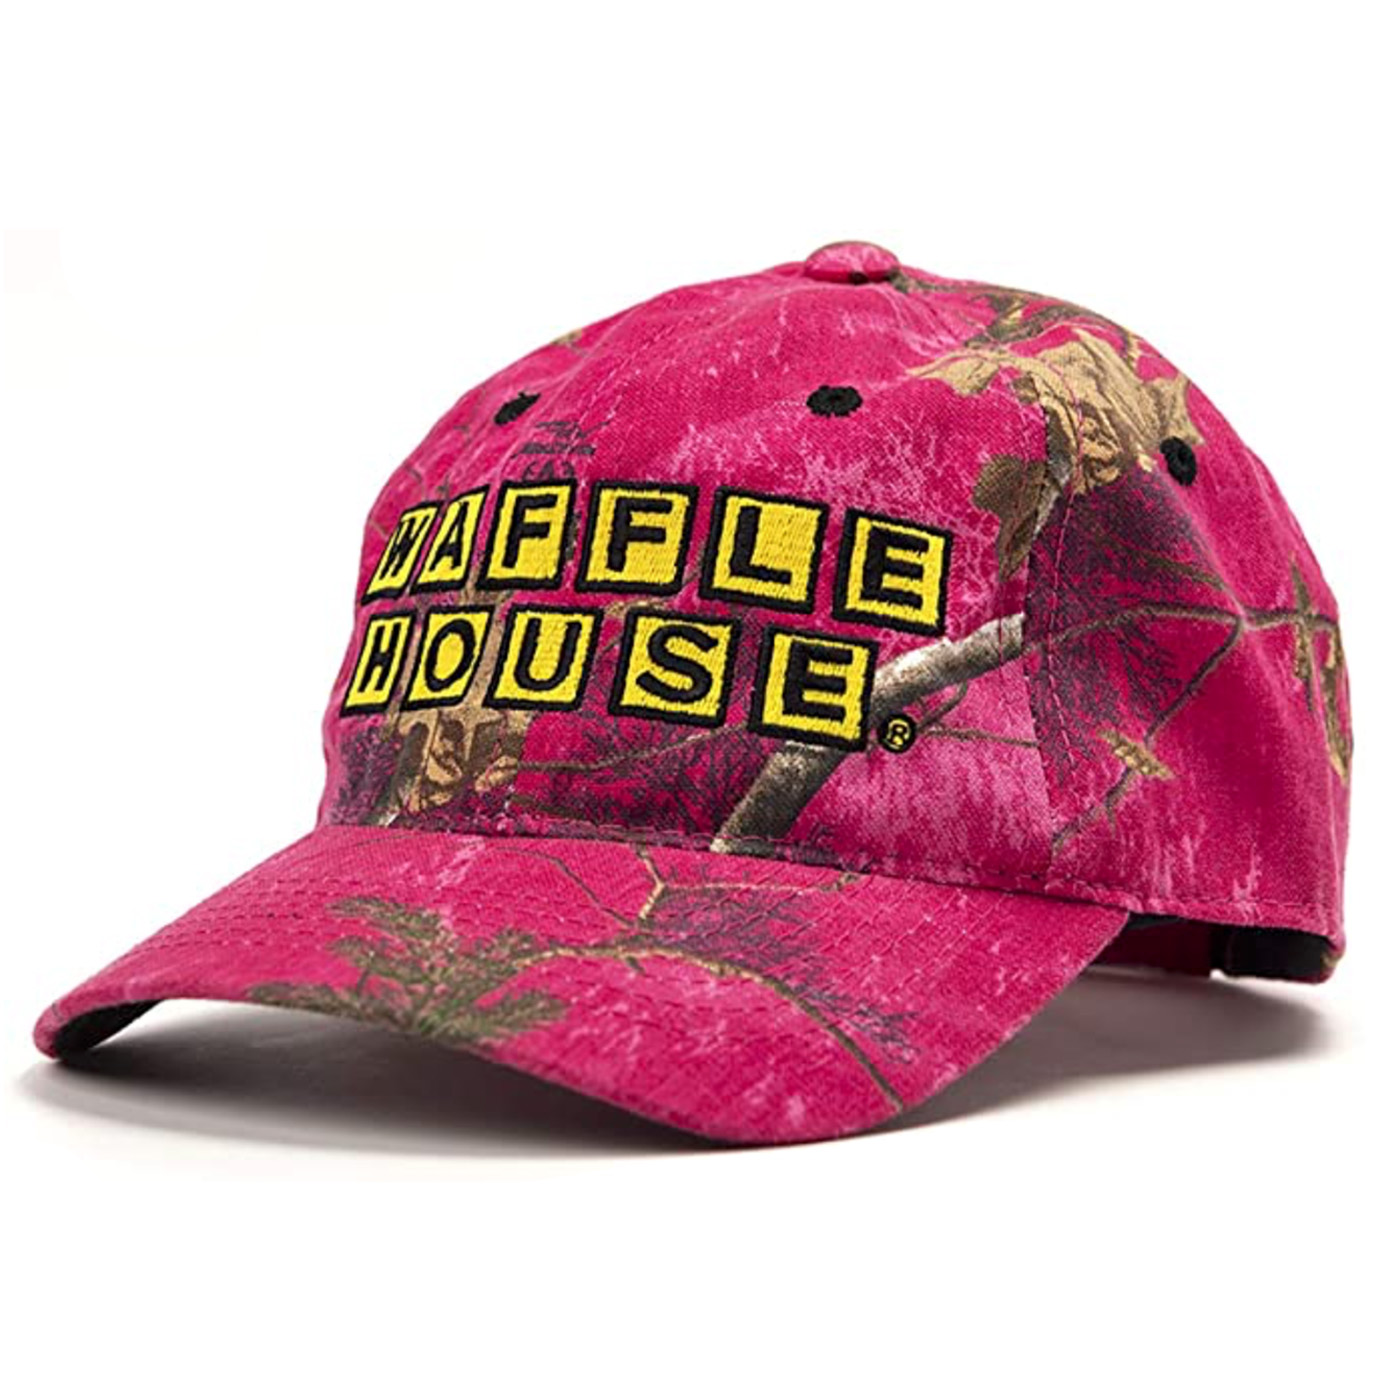 Waffle House Women's Colors Camo Hat